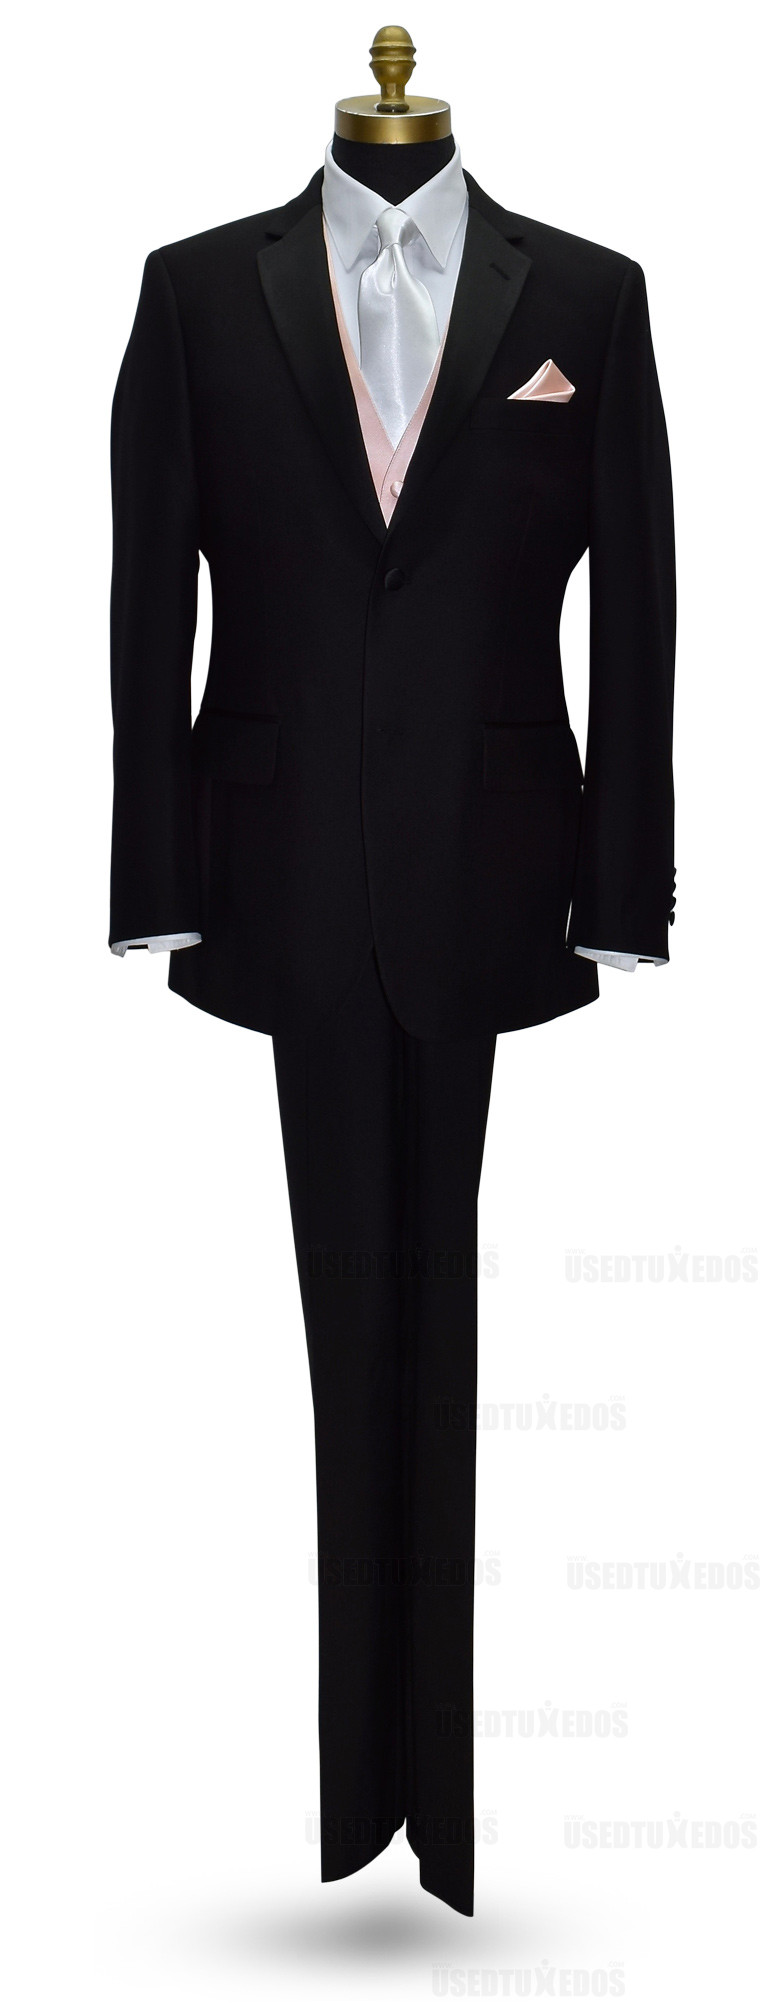 blush tuxedo vest with long white dress tie for men and boys